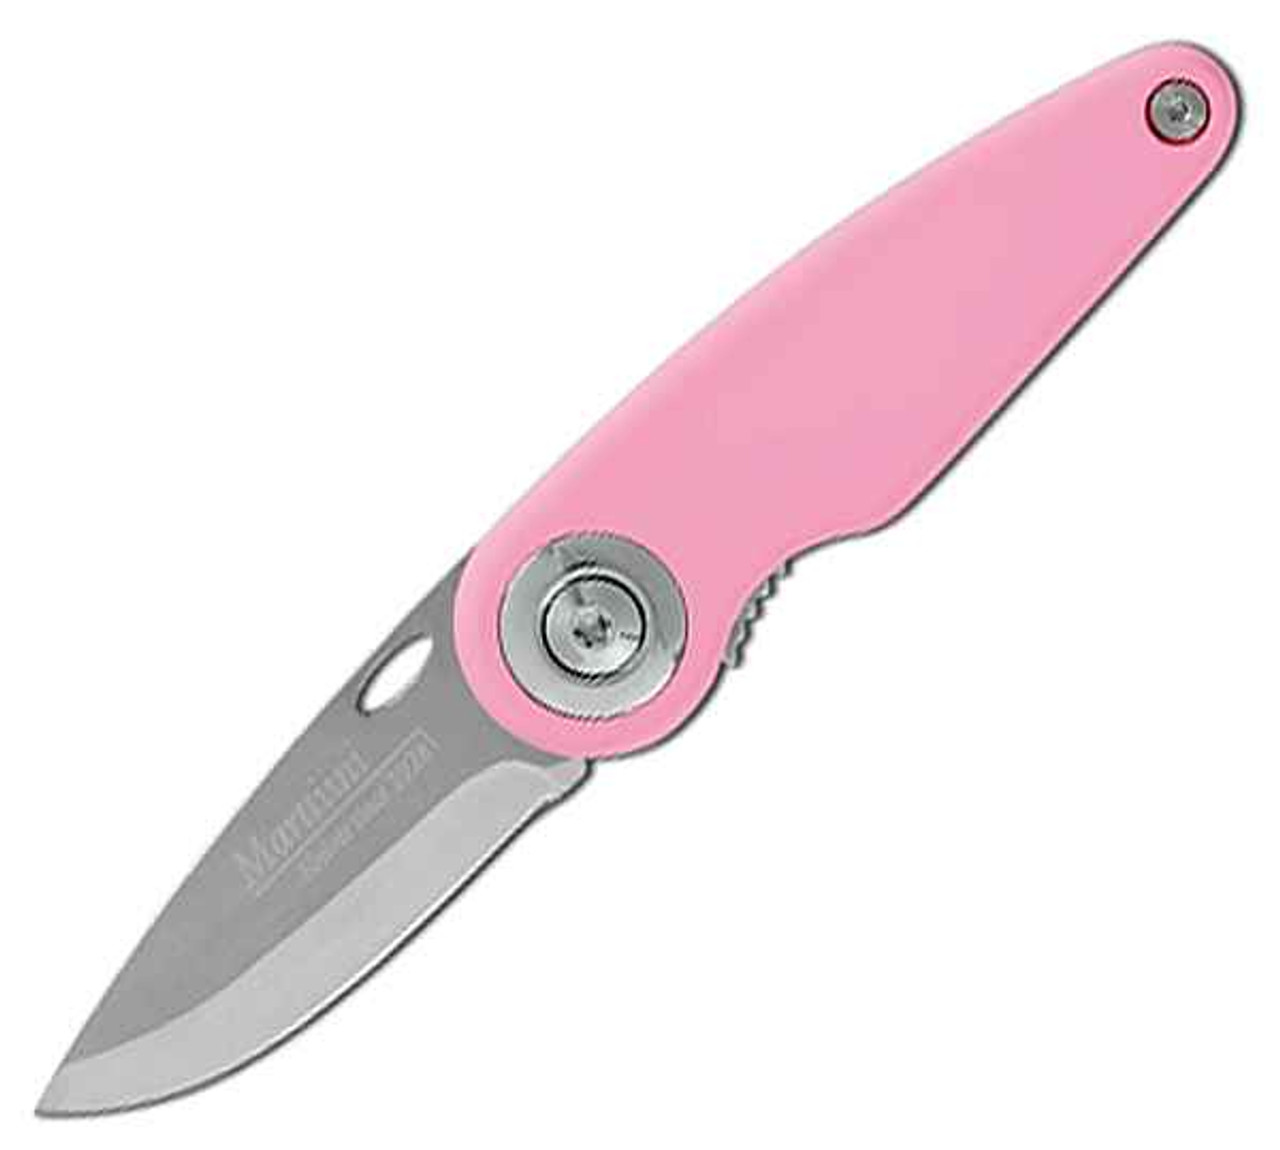 Marttiini Pelican Folder, Stainless Steel, Pink Rubber Handle